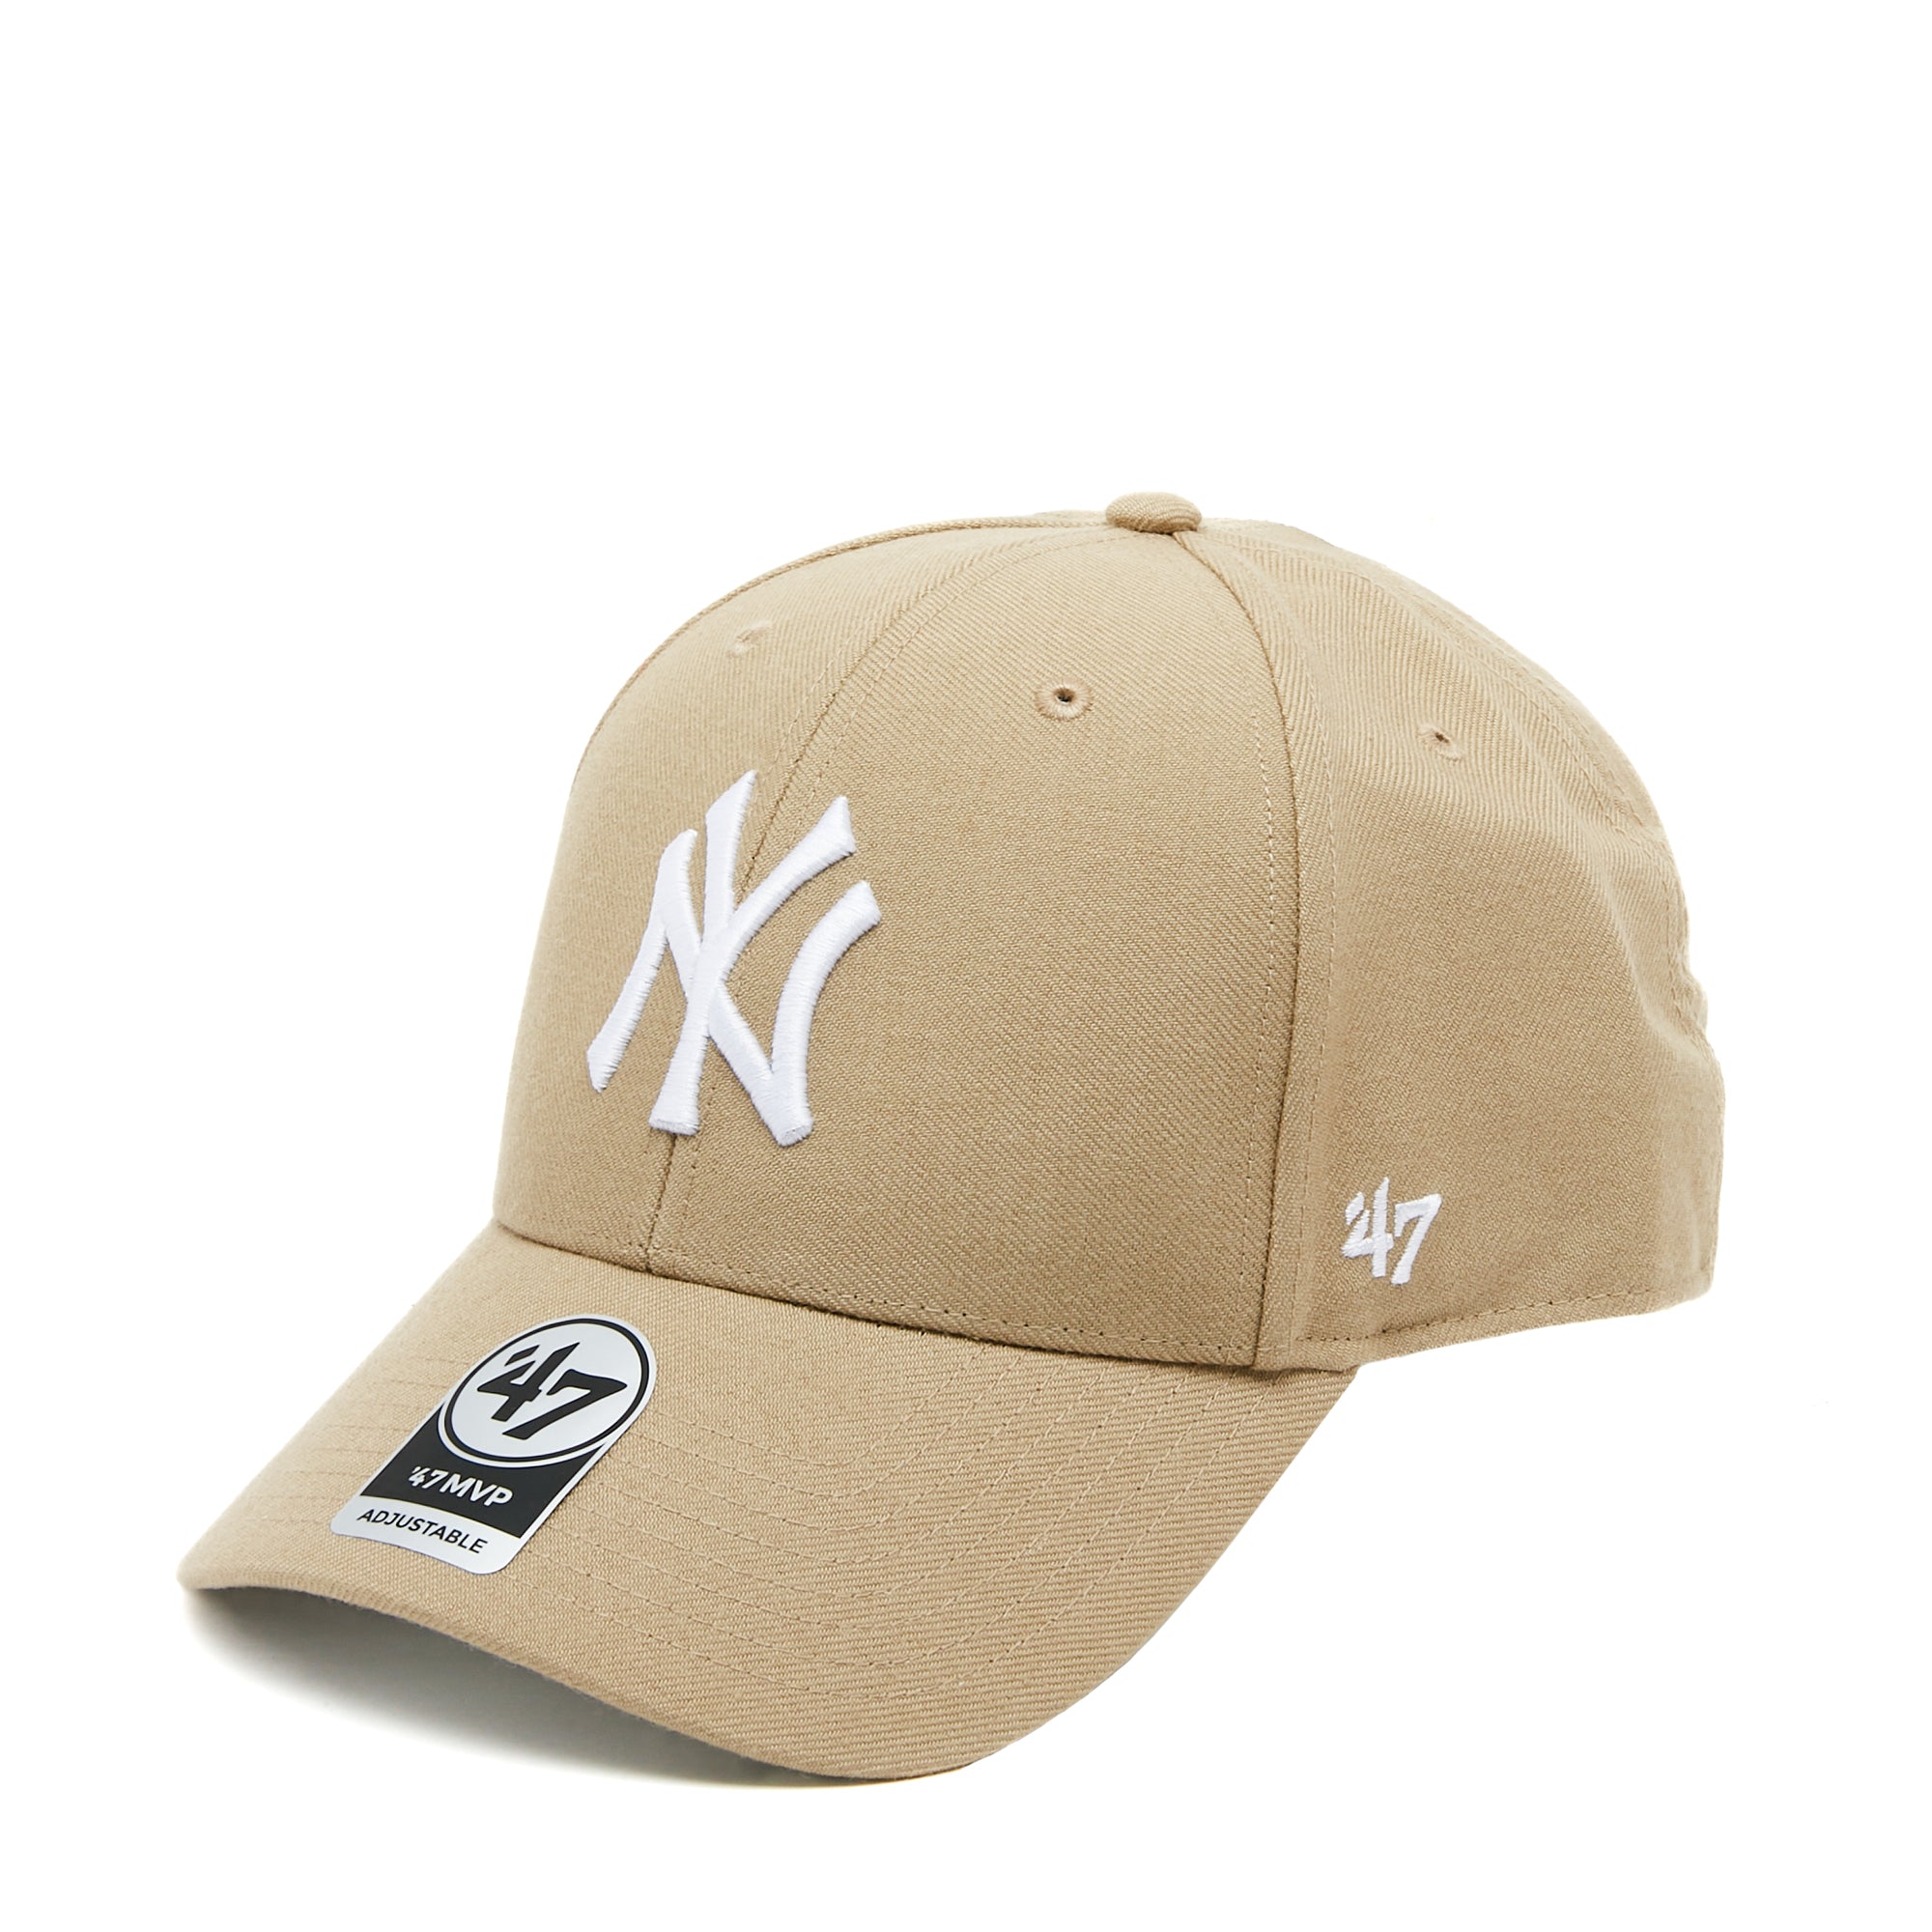 MLB New York Yankees '47 MVP Snapback Cap Khaki One Size